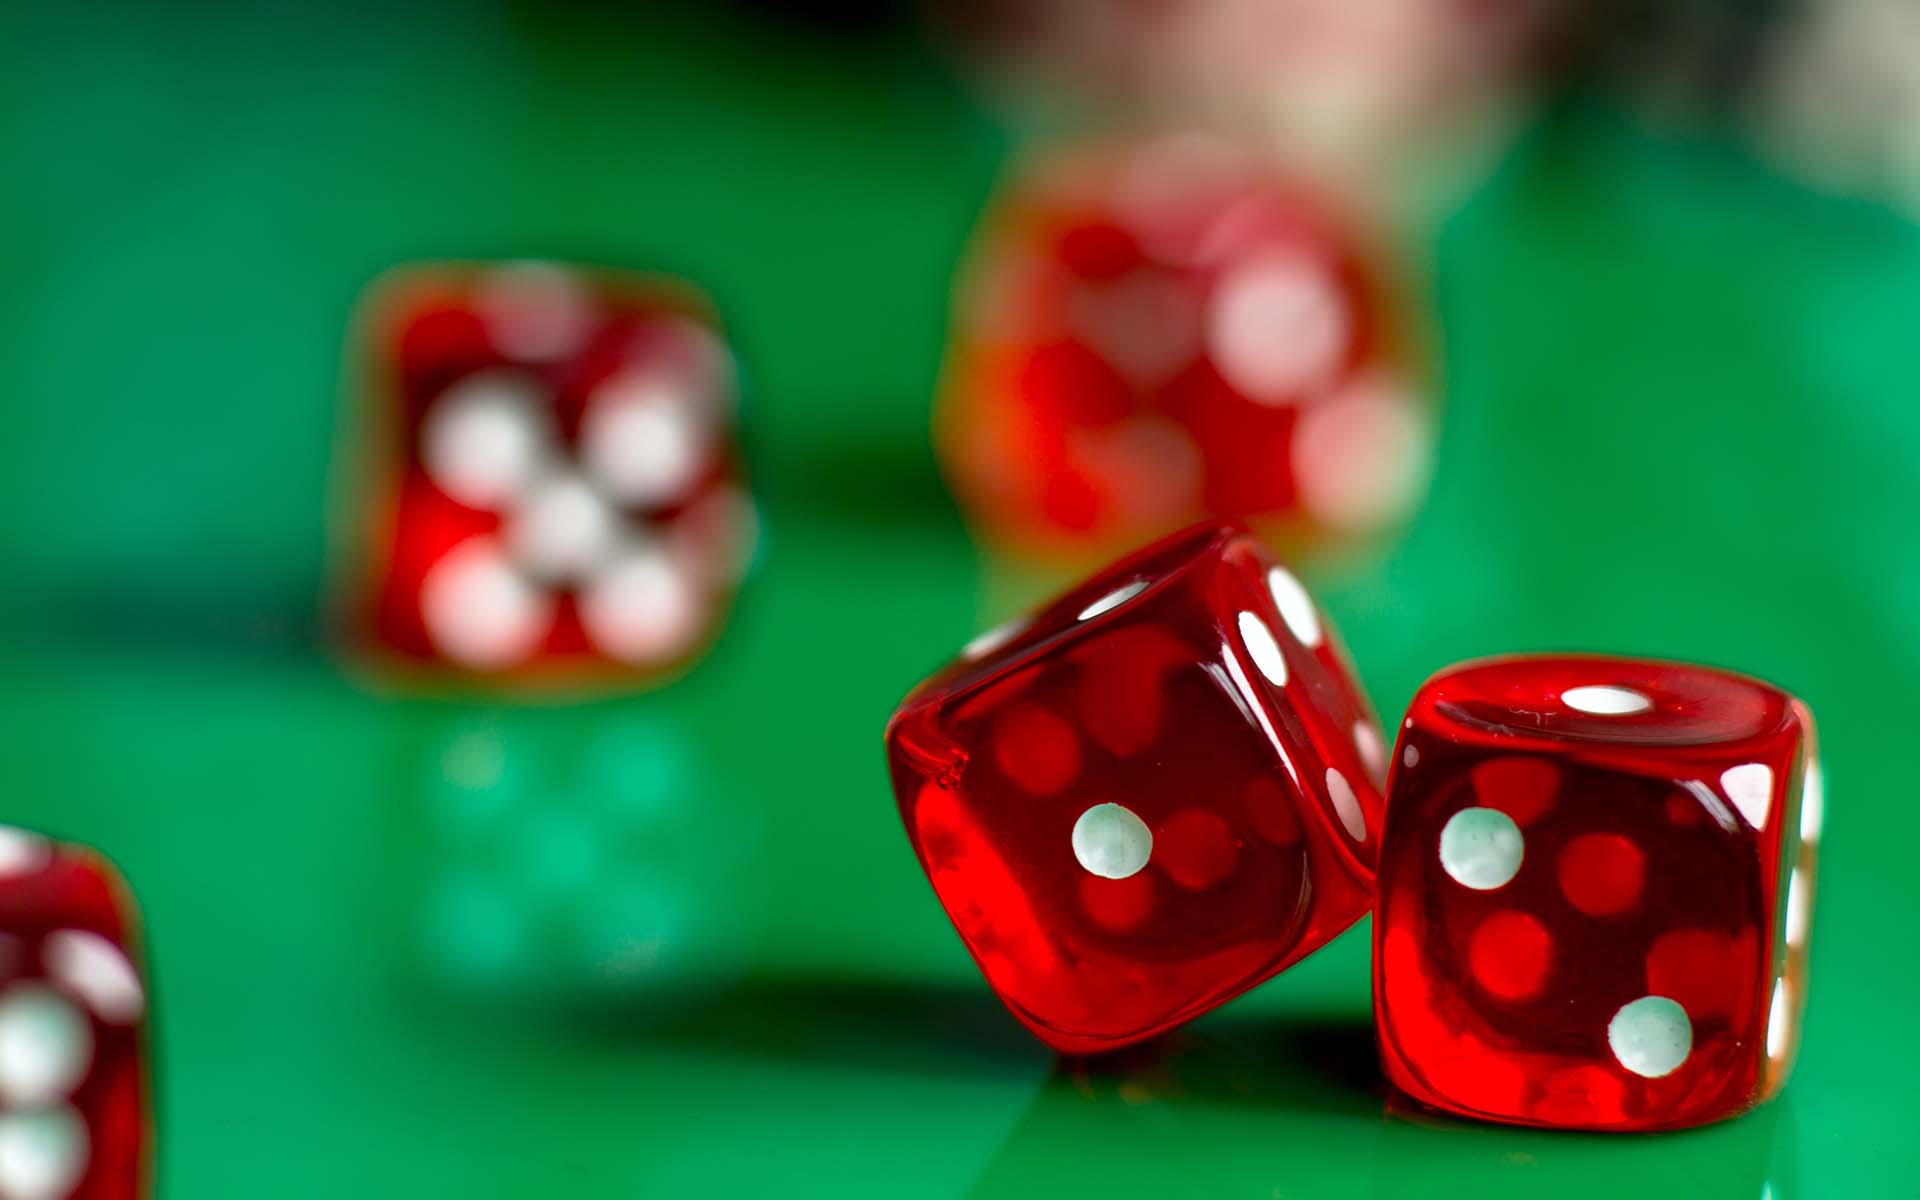 BitDice: Not Gambling On Fairness